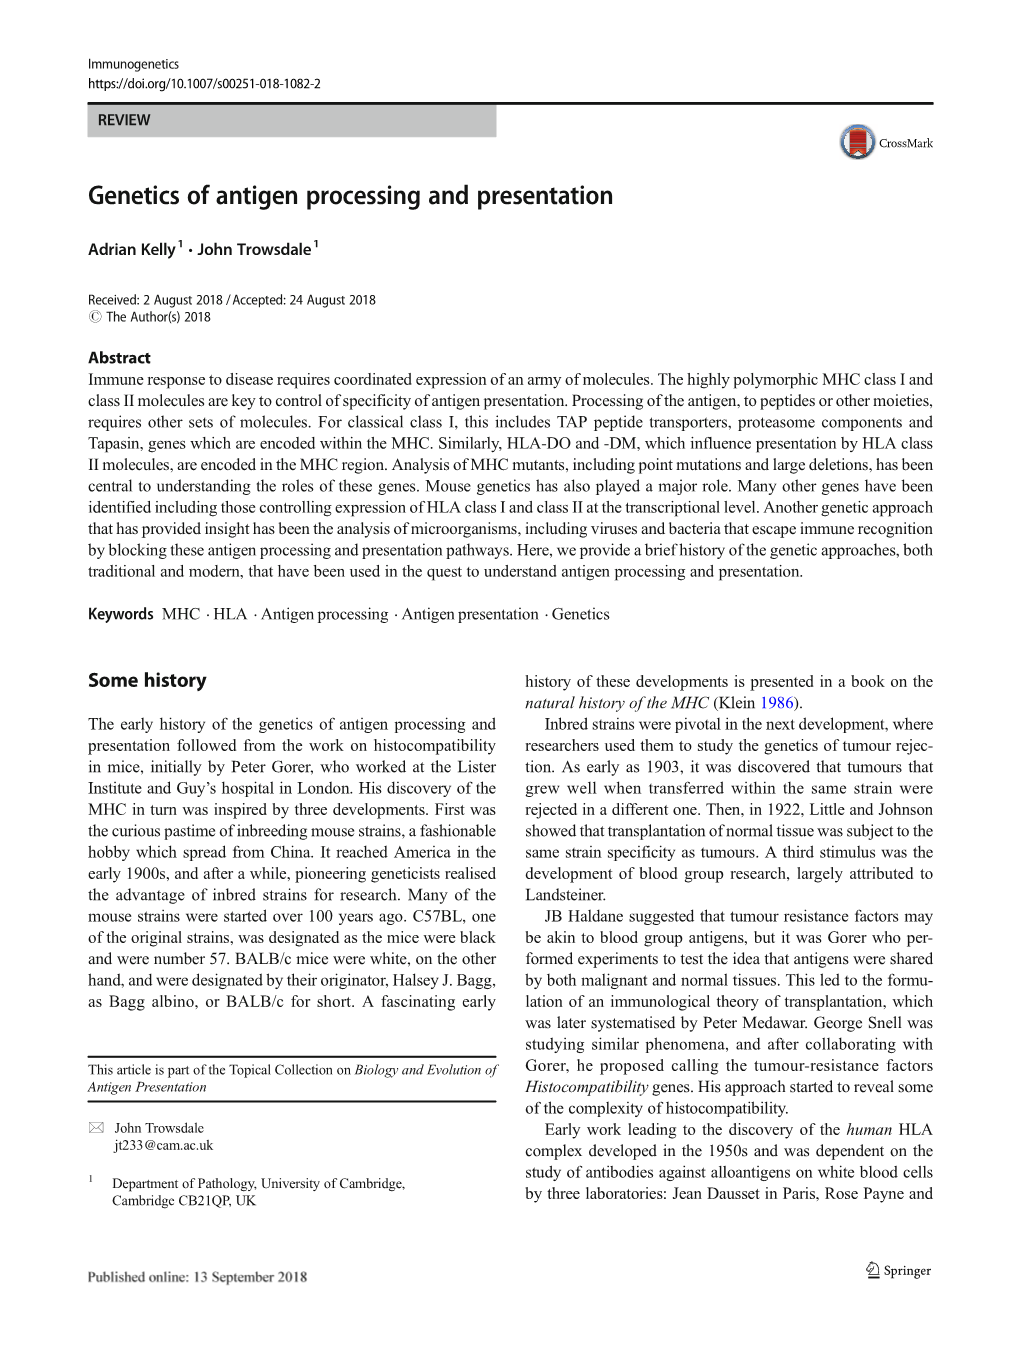 Genetics of Antigen Processing and Presentation